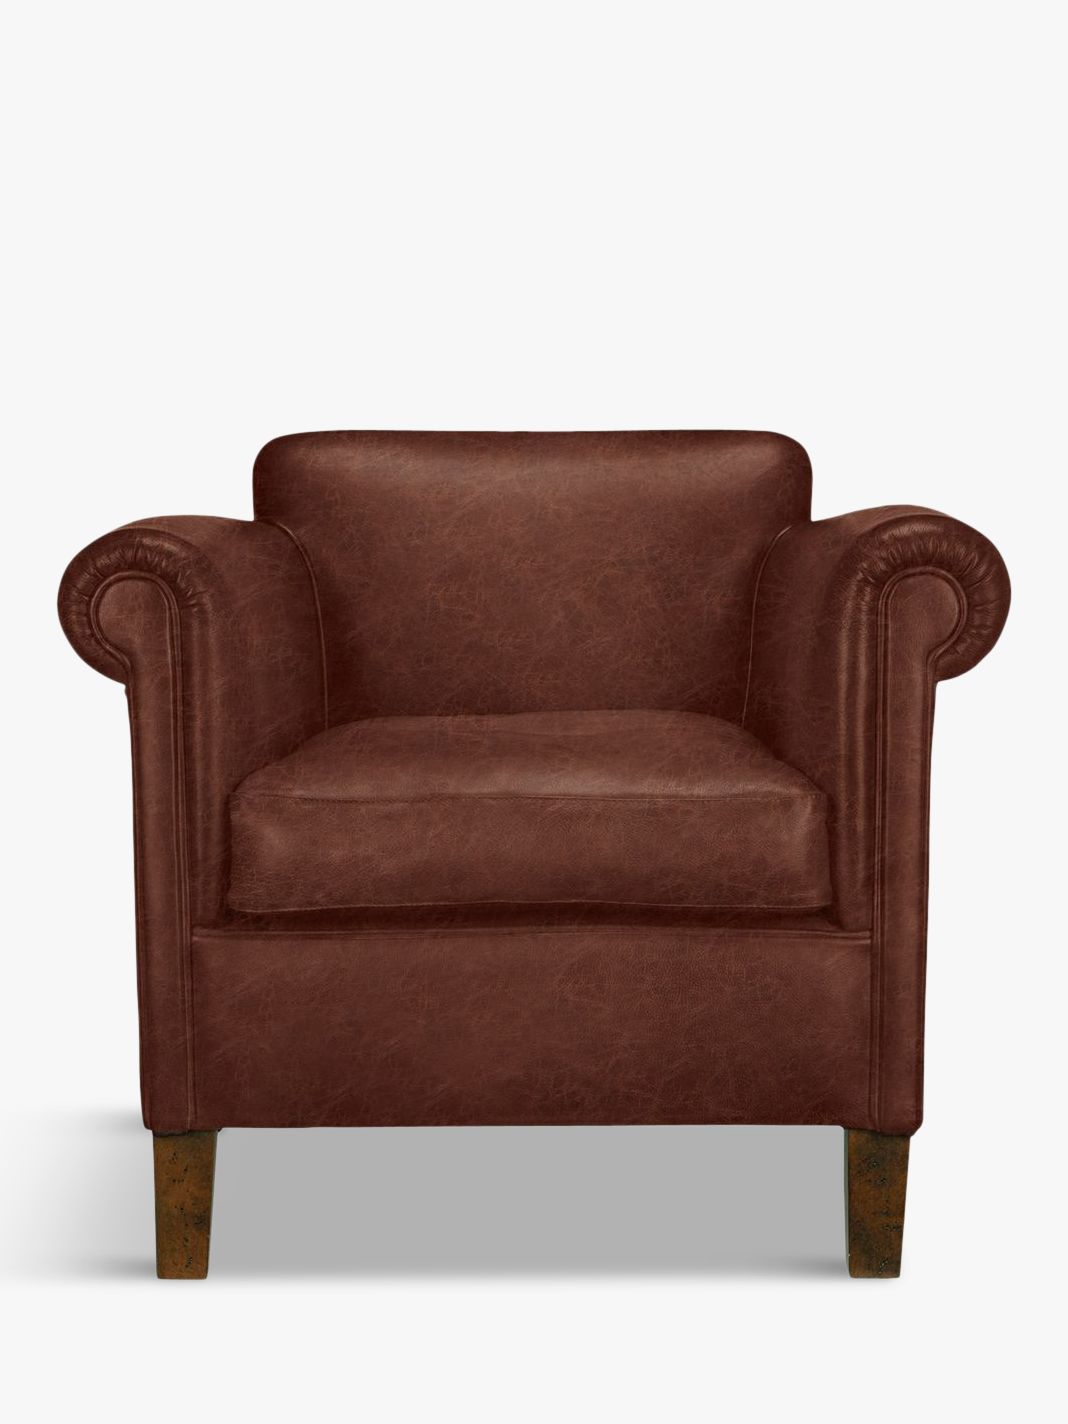 Camford Range, John Lewis Camford Leather Armchair